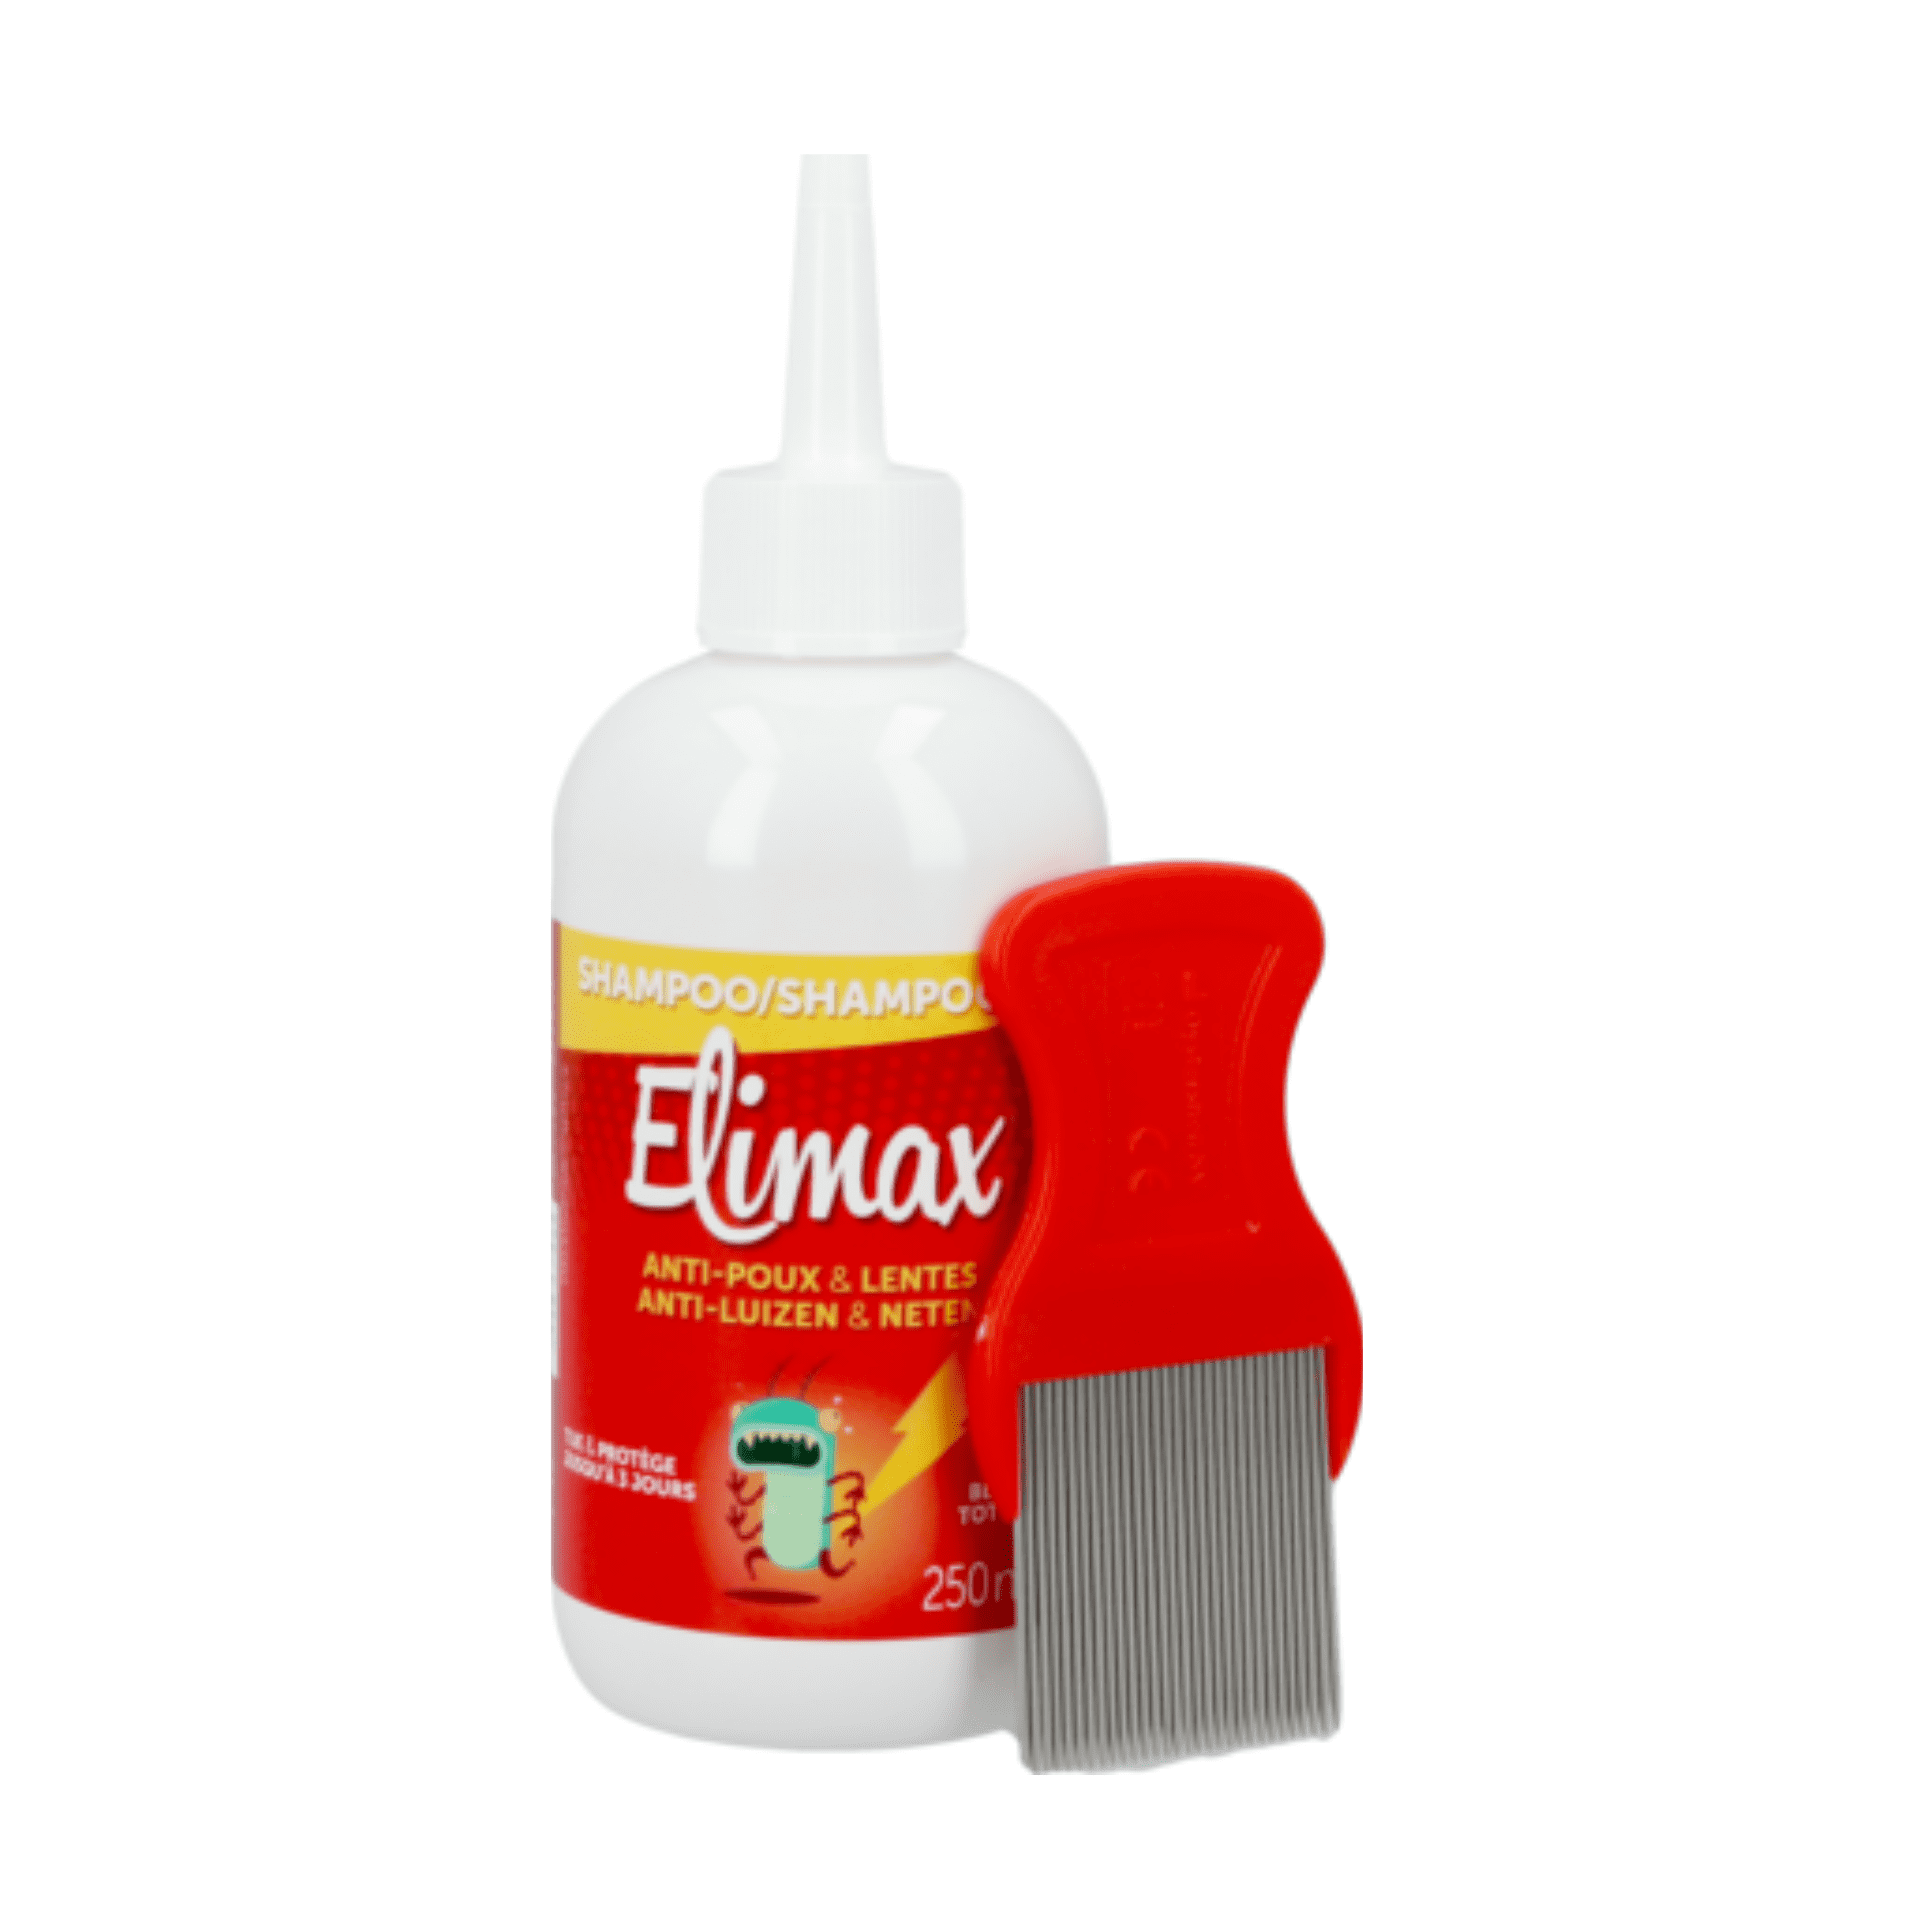 Elimax 2-in-1 Shampoo